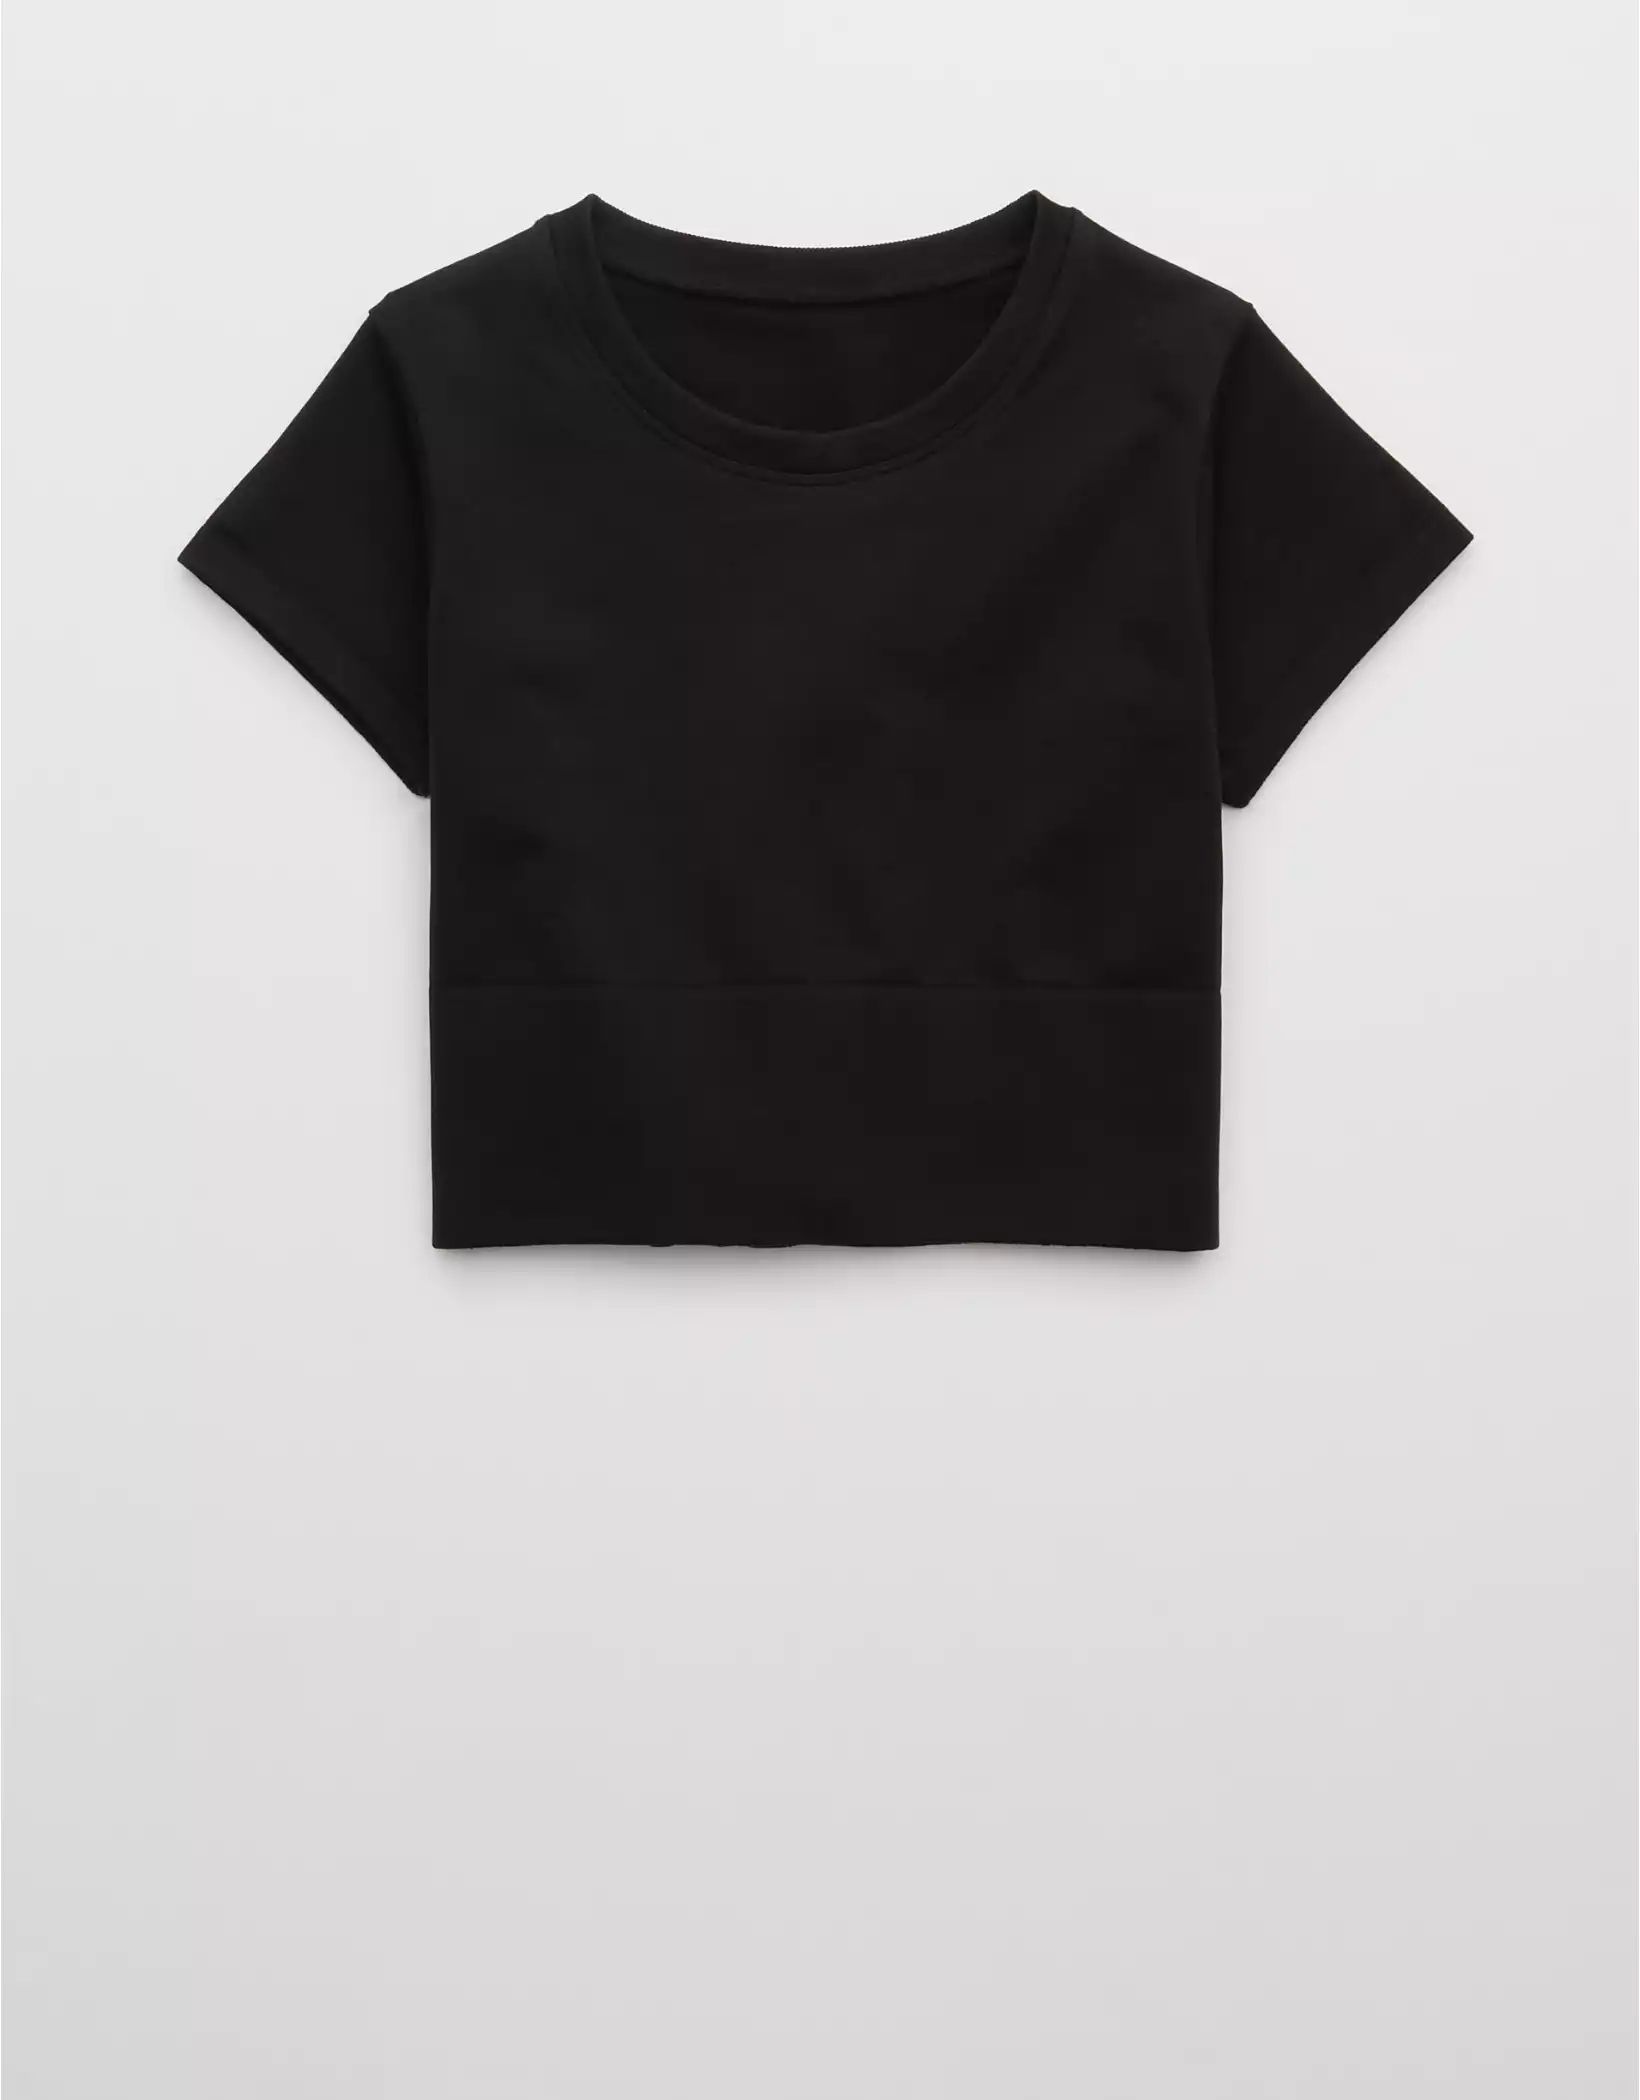 OFFLINE By Aerie Sidewalk Seamless Cropped T-Shirt | Aerie